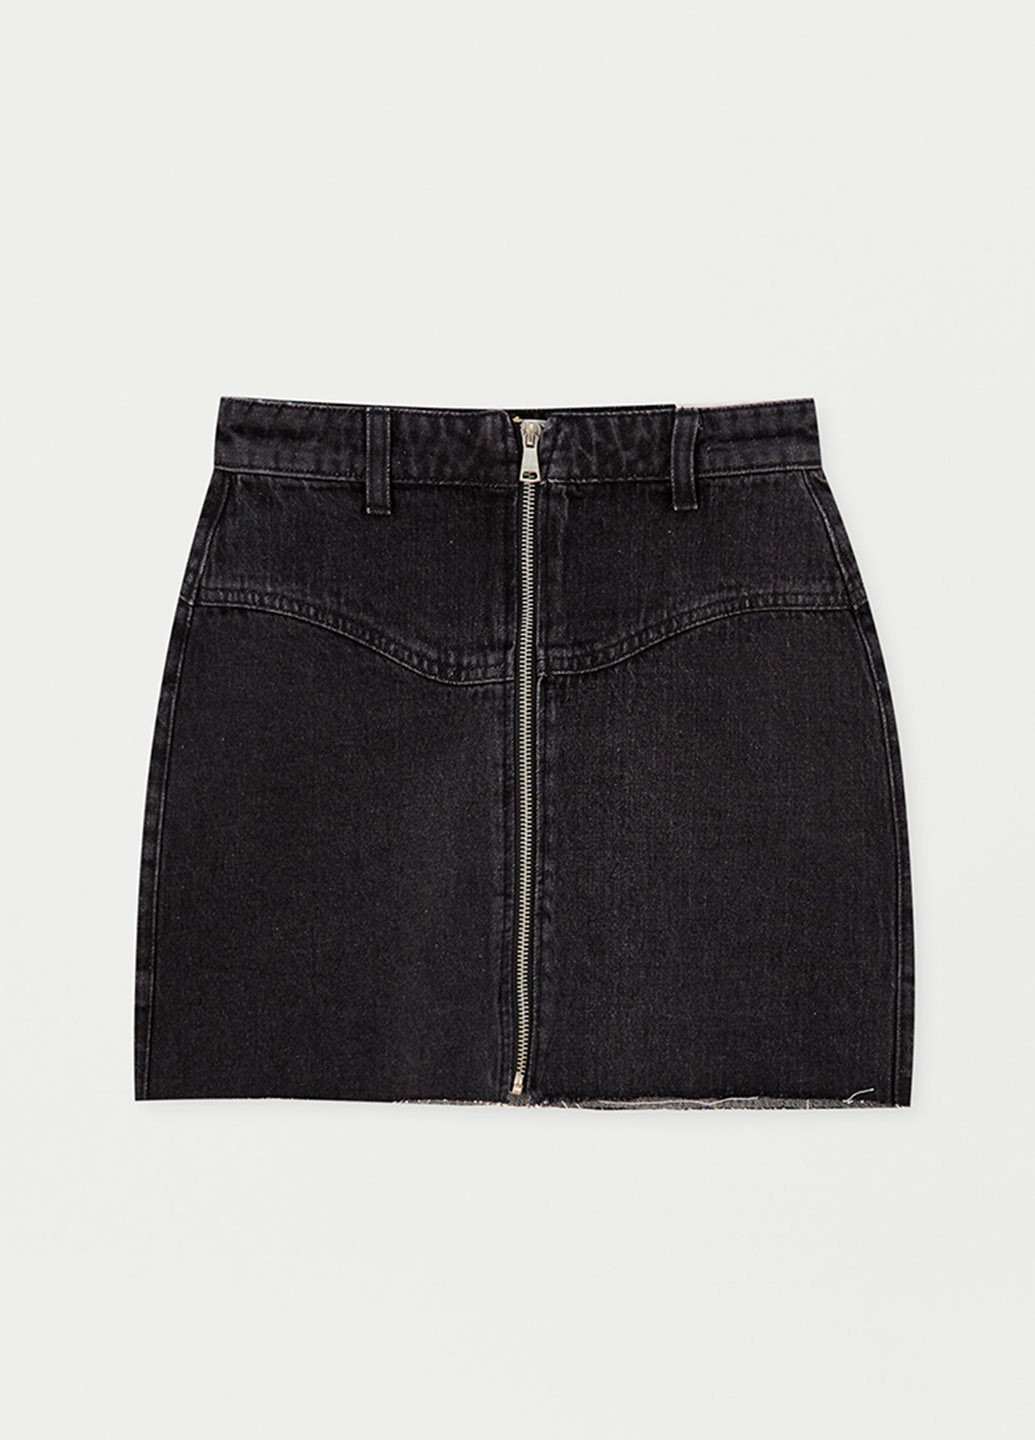 Темно-серая джинсовая однотонная юбка Pull & Bear а-силуэта (трапеция)